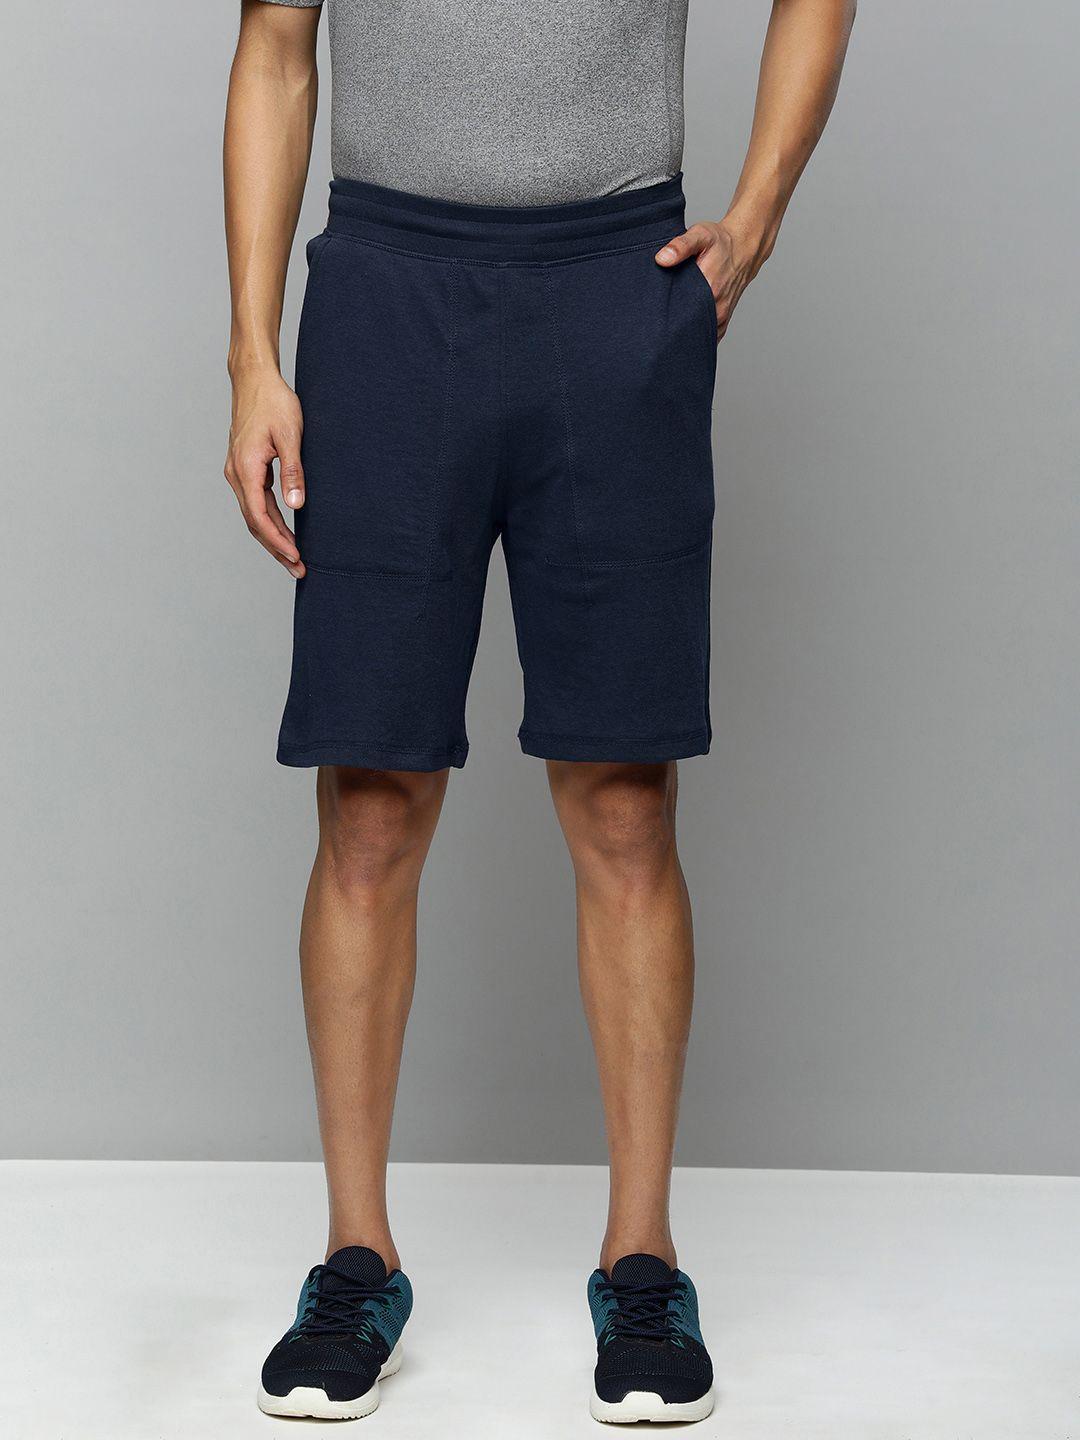 skechers-men-navy-blue-sports-shorts-with-e-dry-technology-technology